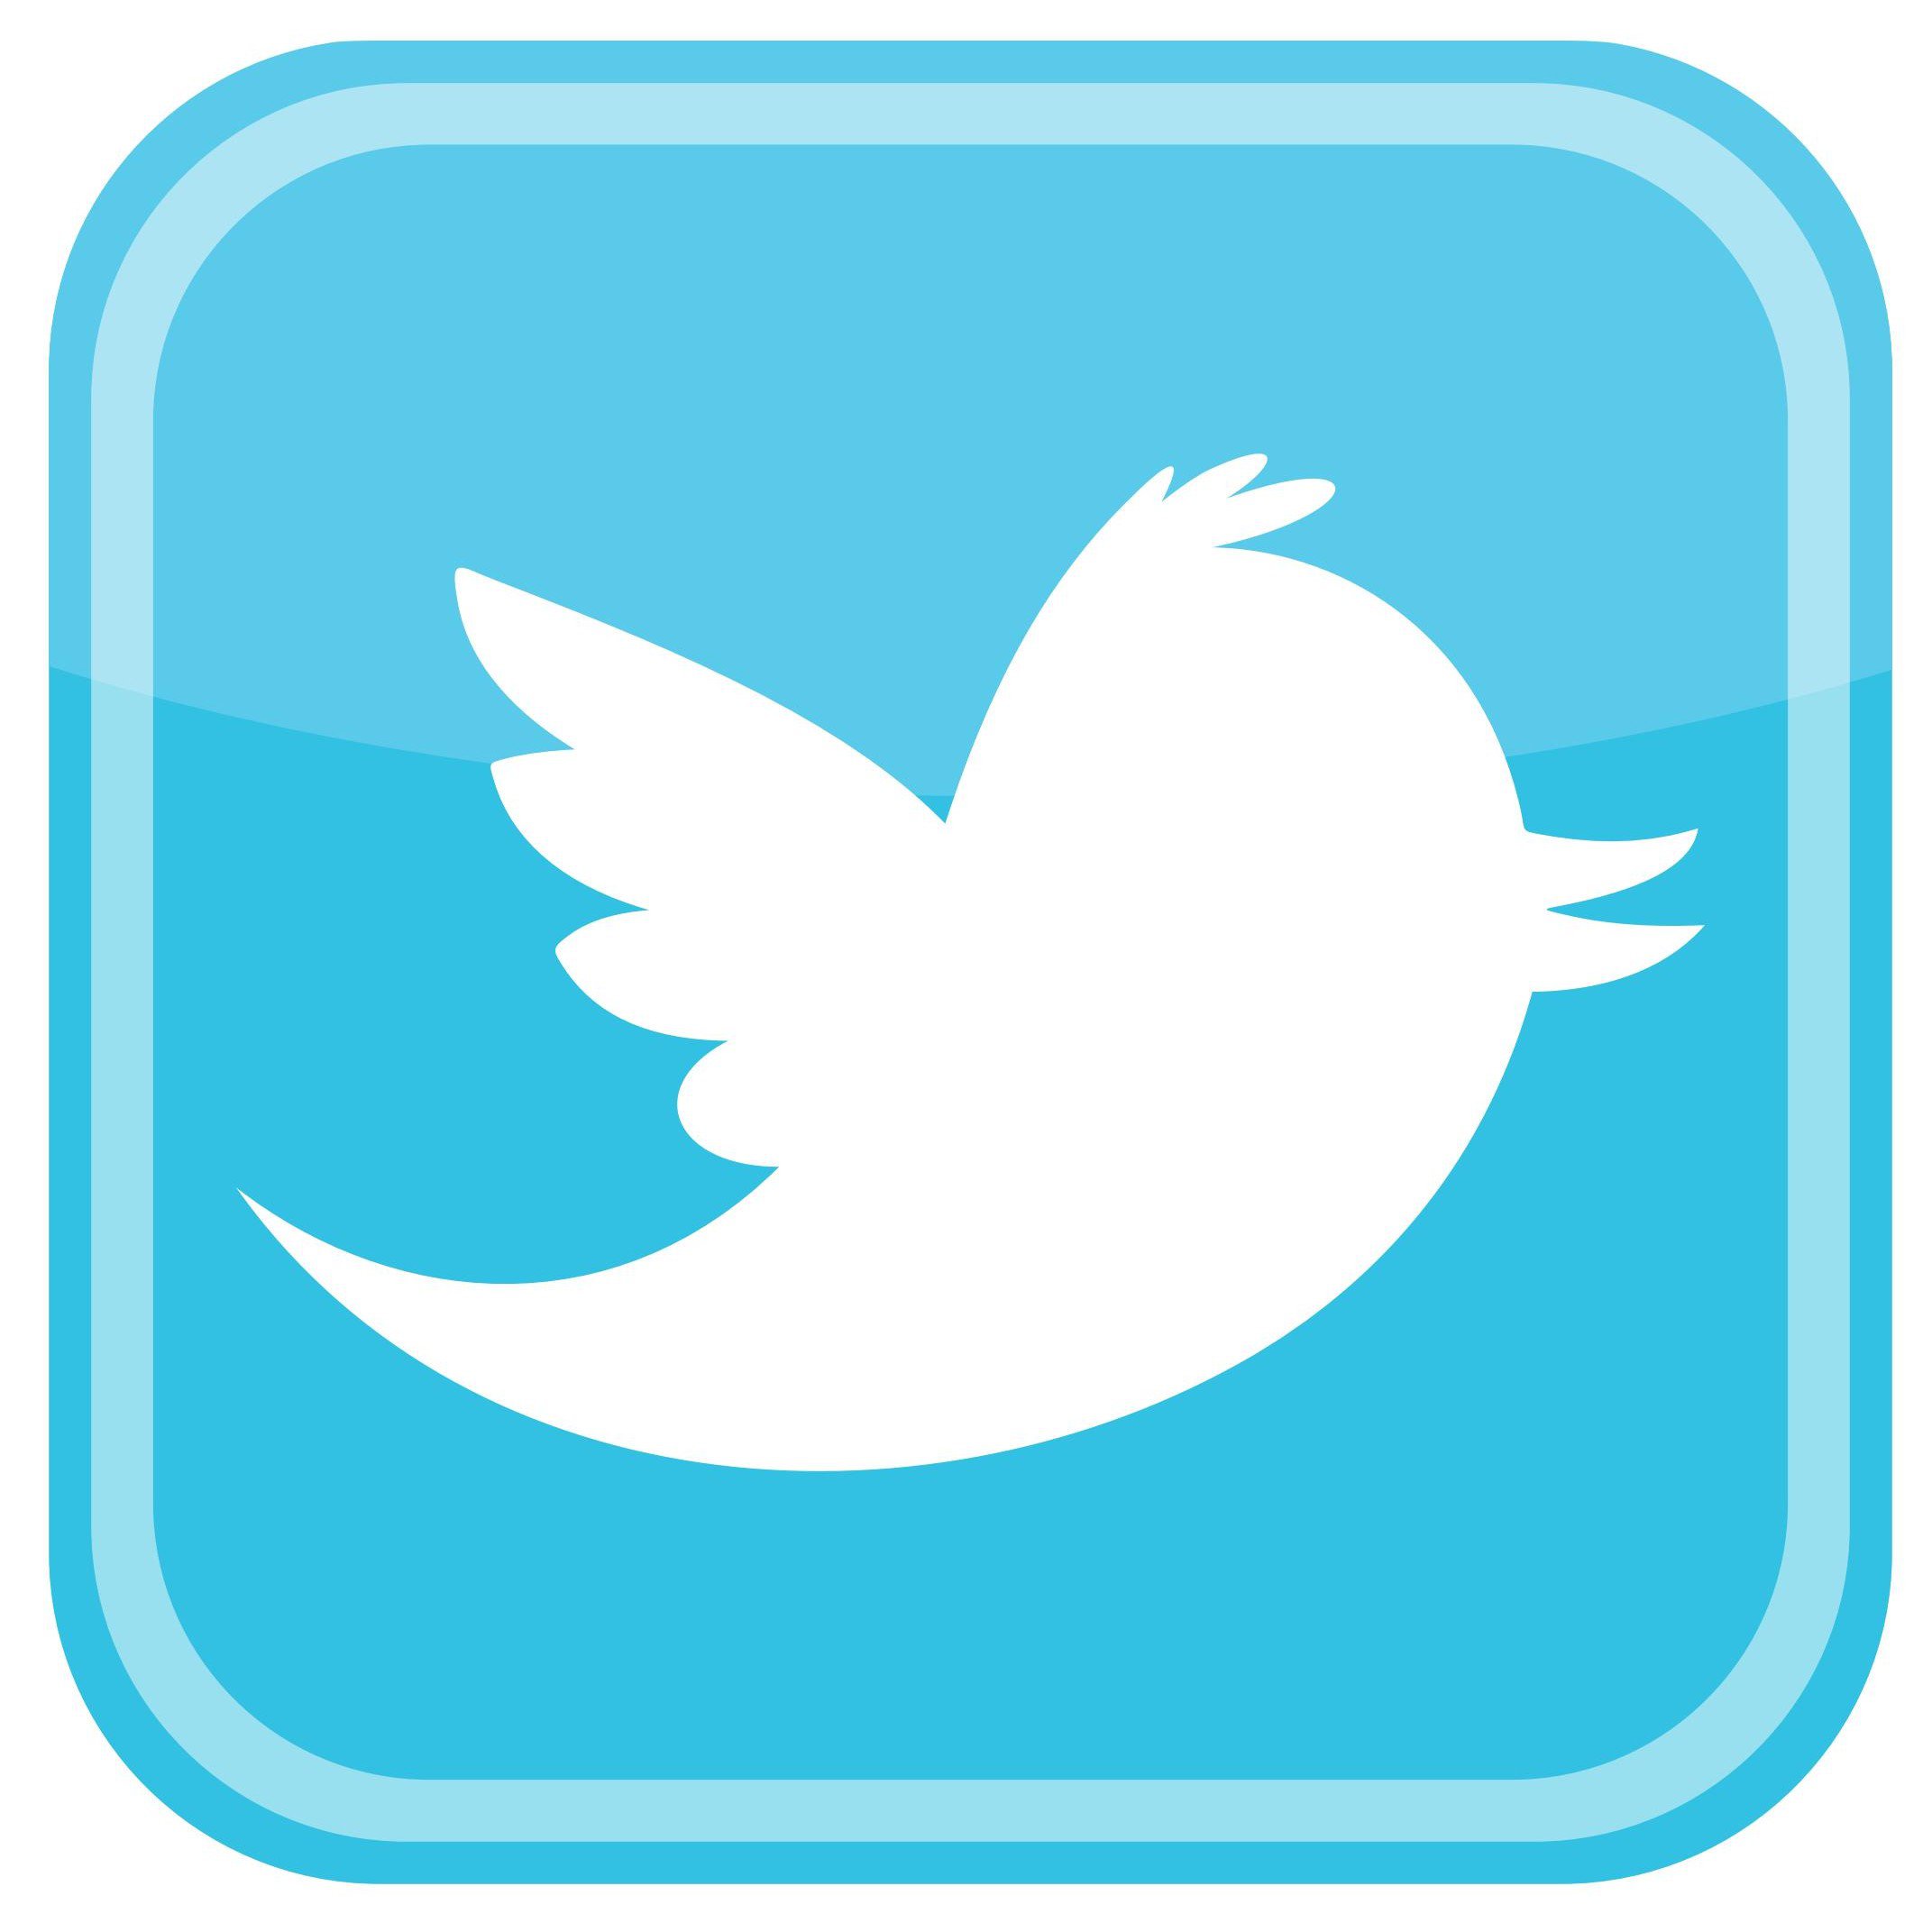 Twitter logo clipart png